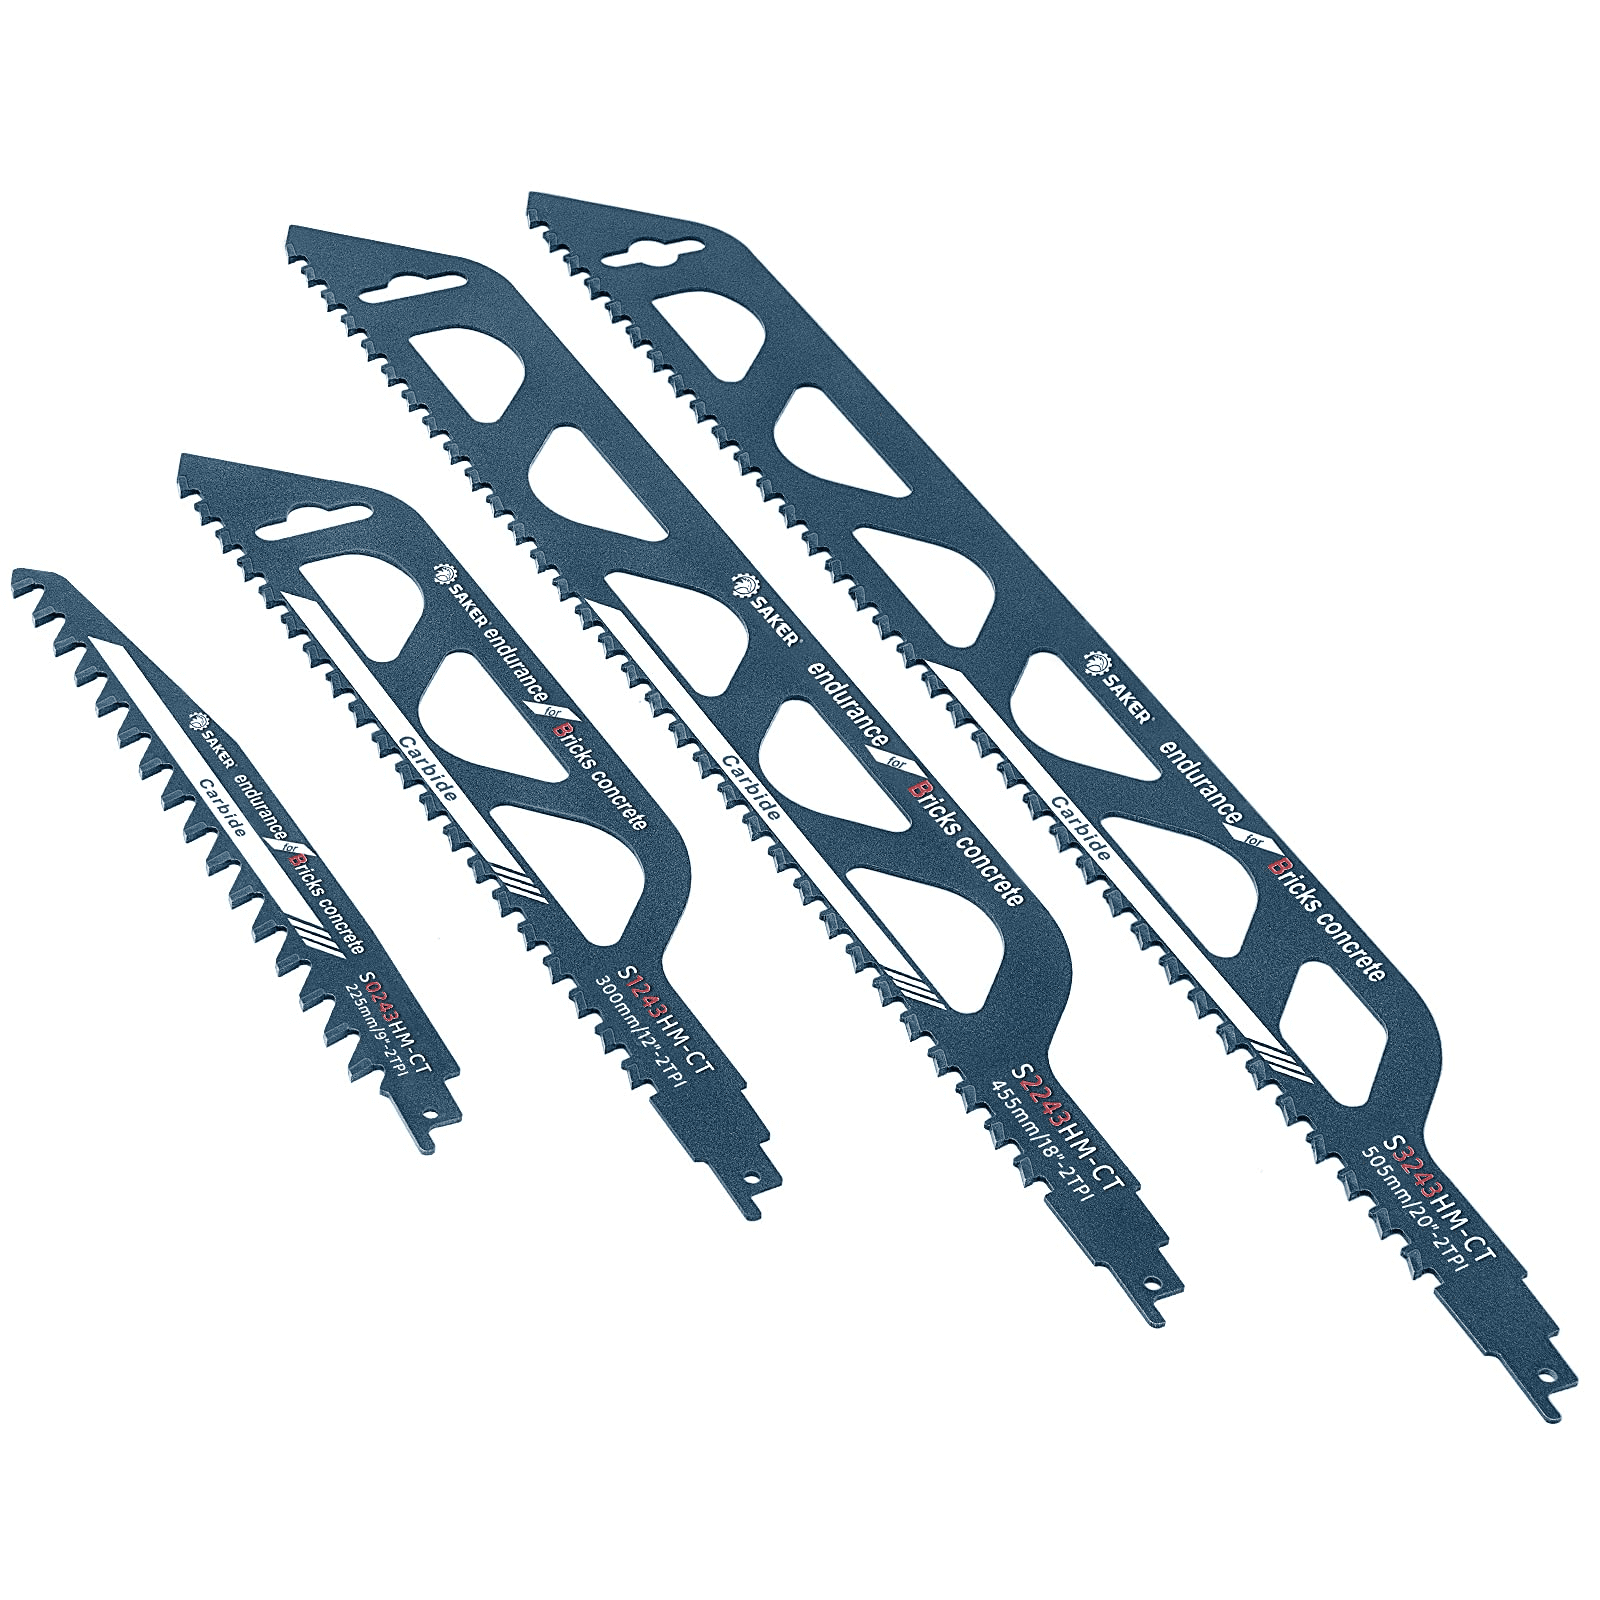 Black & Decker 4 24-TPI Metal Cutting Reciprocating Saw Blades - 2pk on  eBid United States